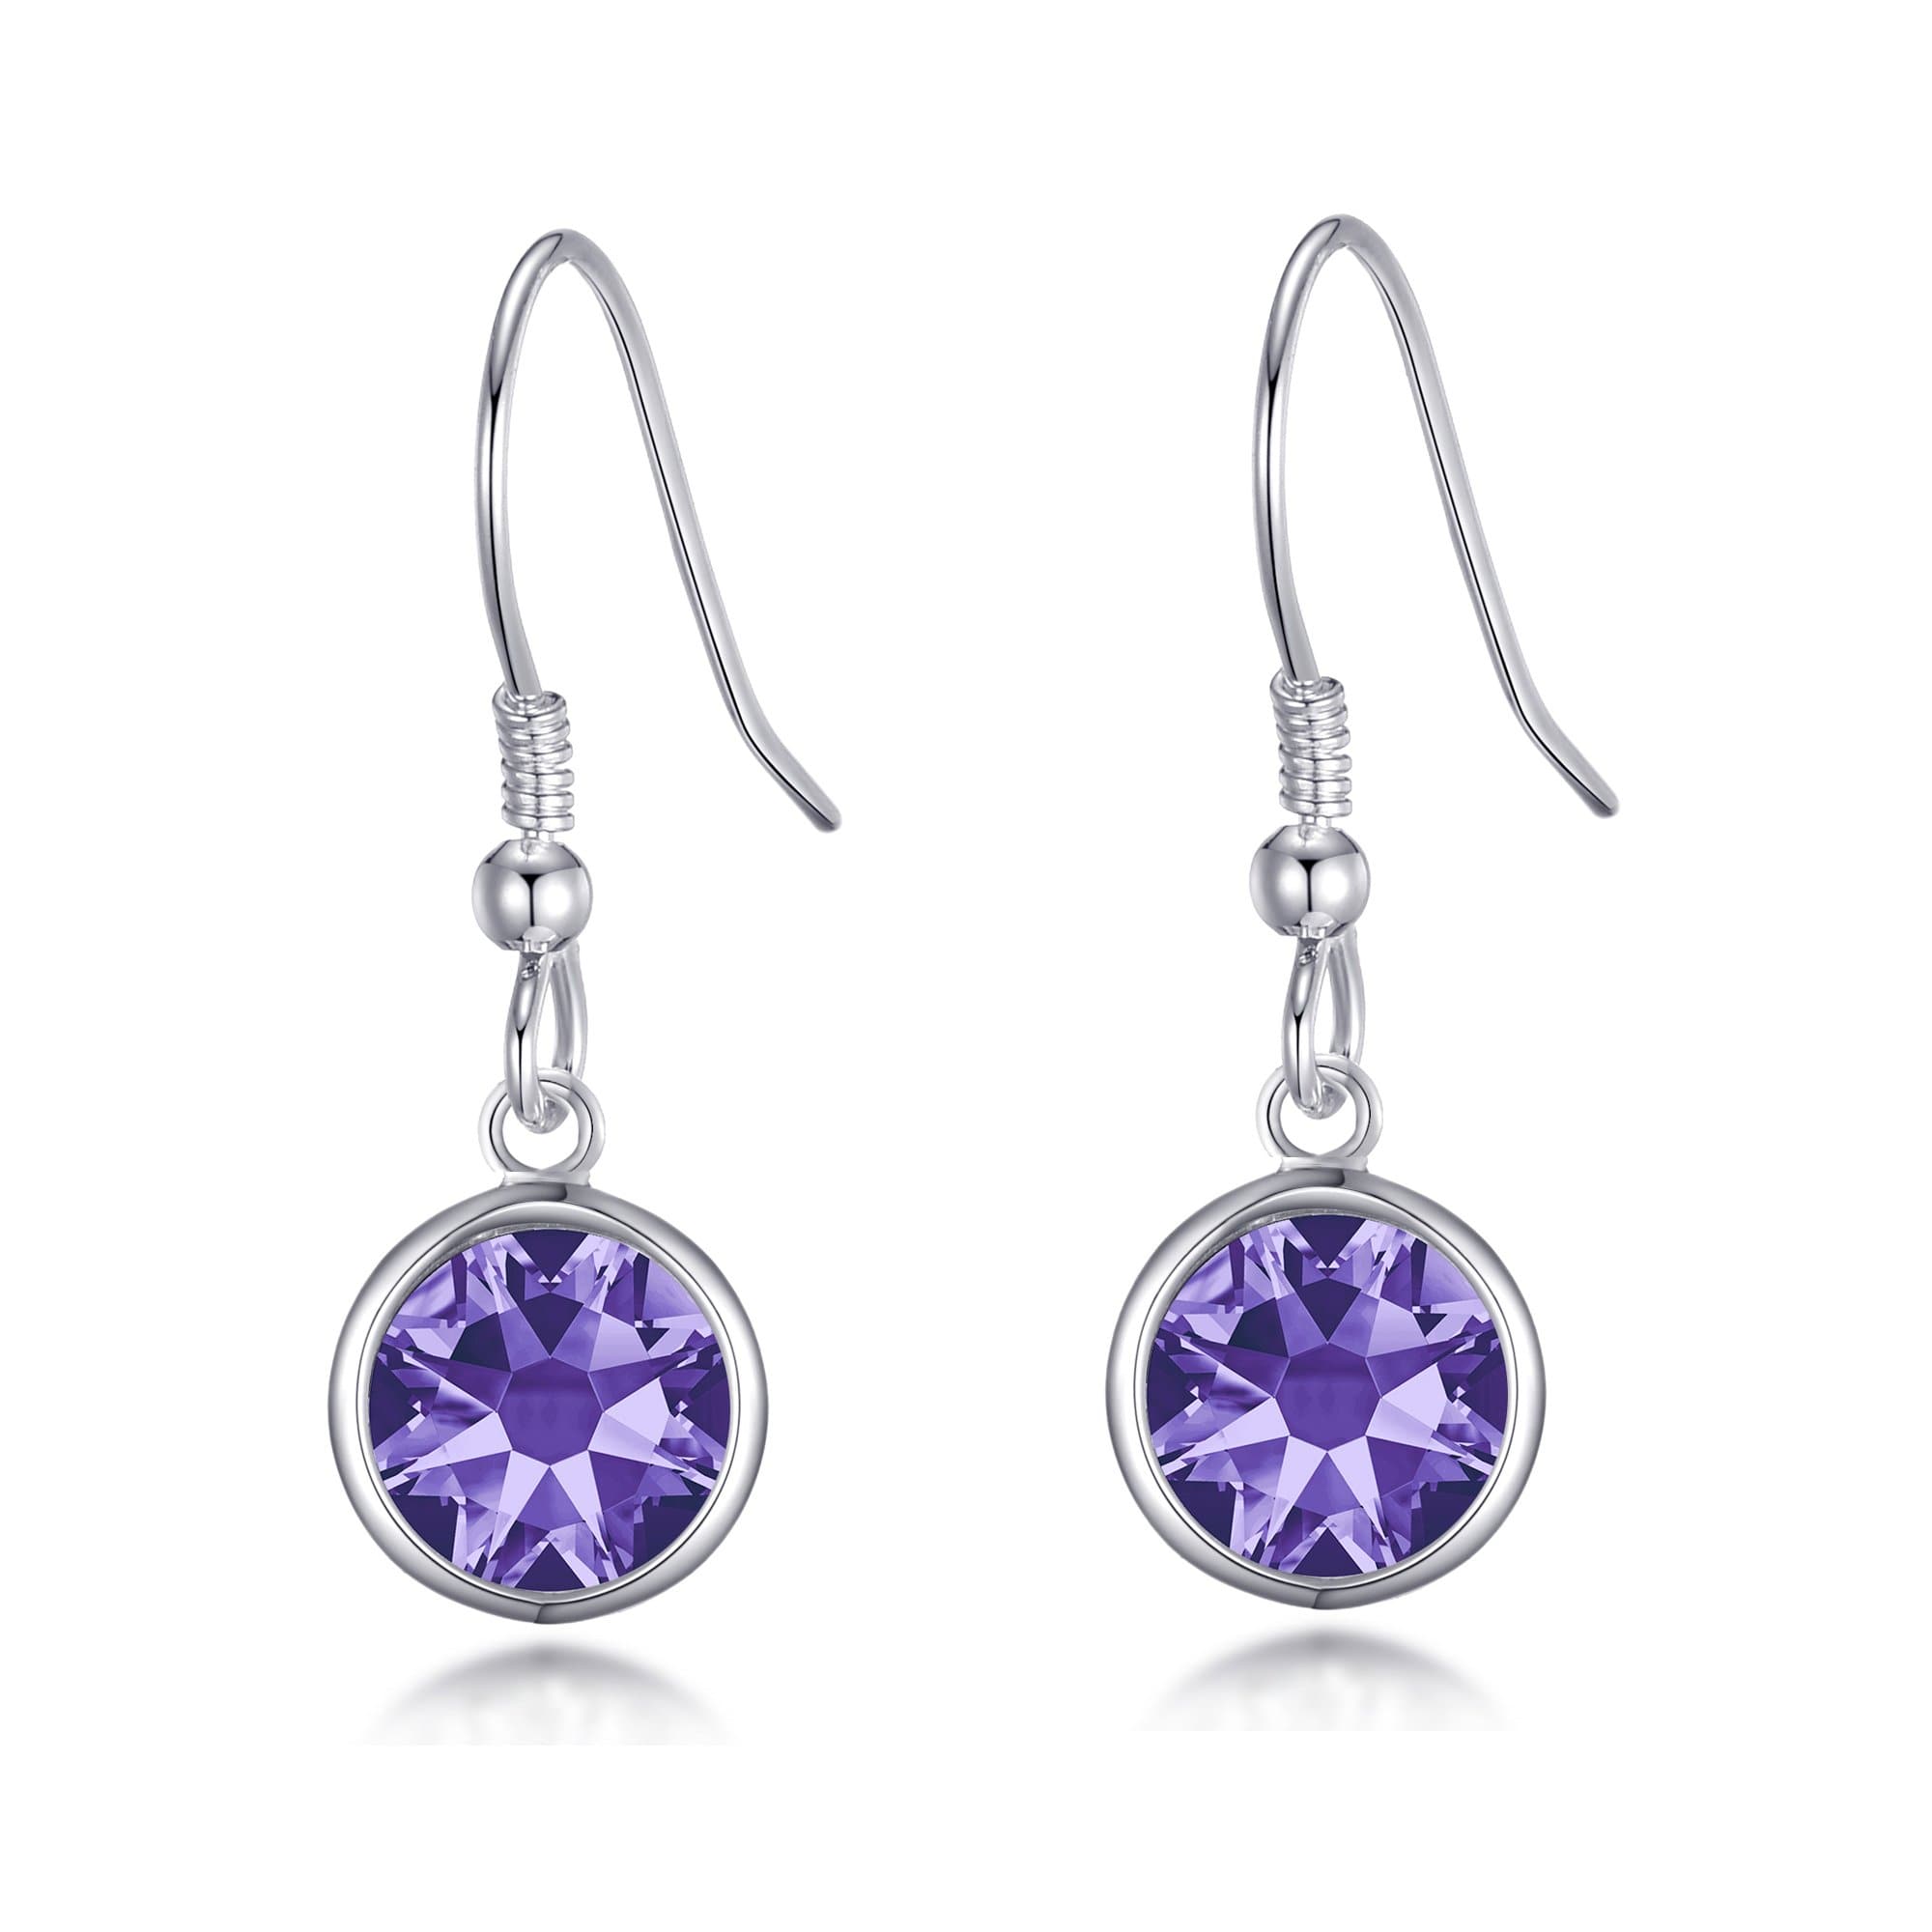 Light Purple Crystal Drop Earrings Created with Zircondia® Crystals by Philip Jones Jewellery